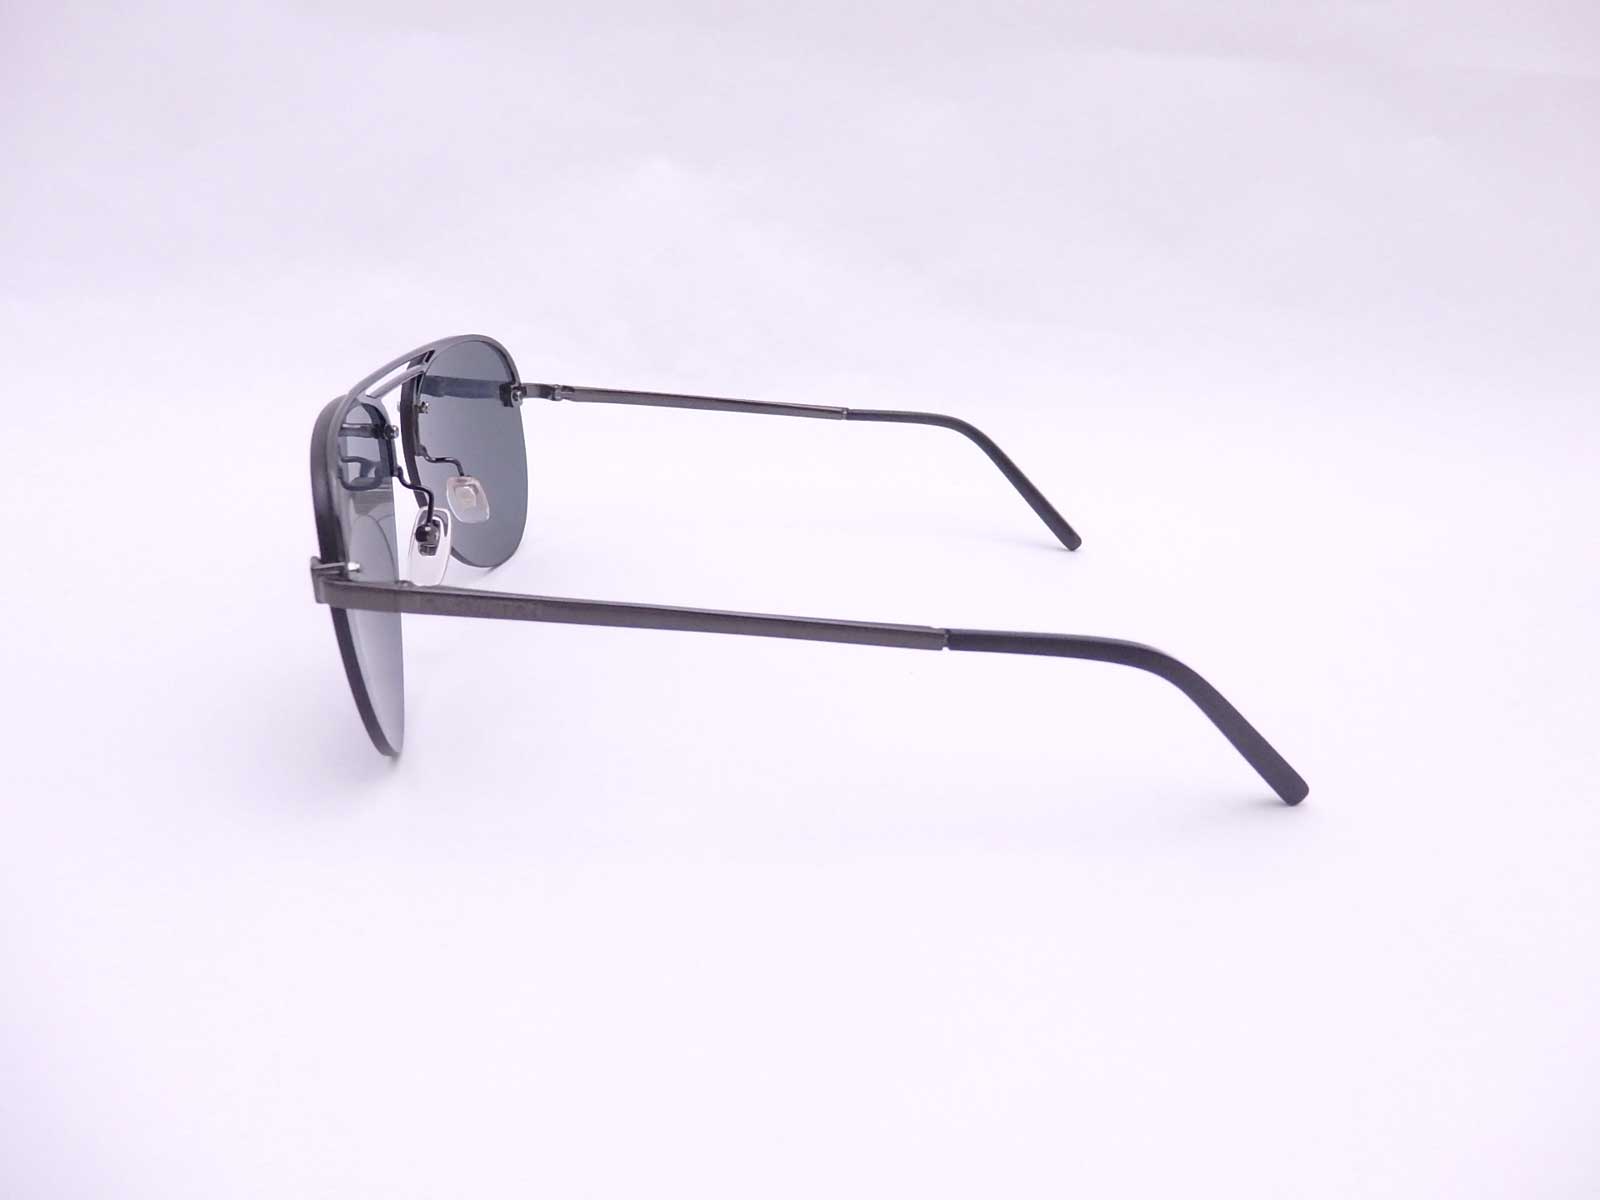 Auth Louis Vuitton Clockwise Pilot Sunglasses Gunmetal Black - e44068 | eBay